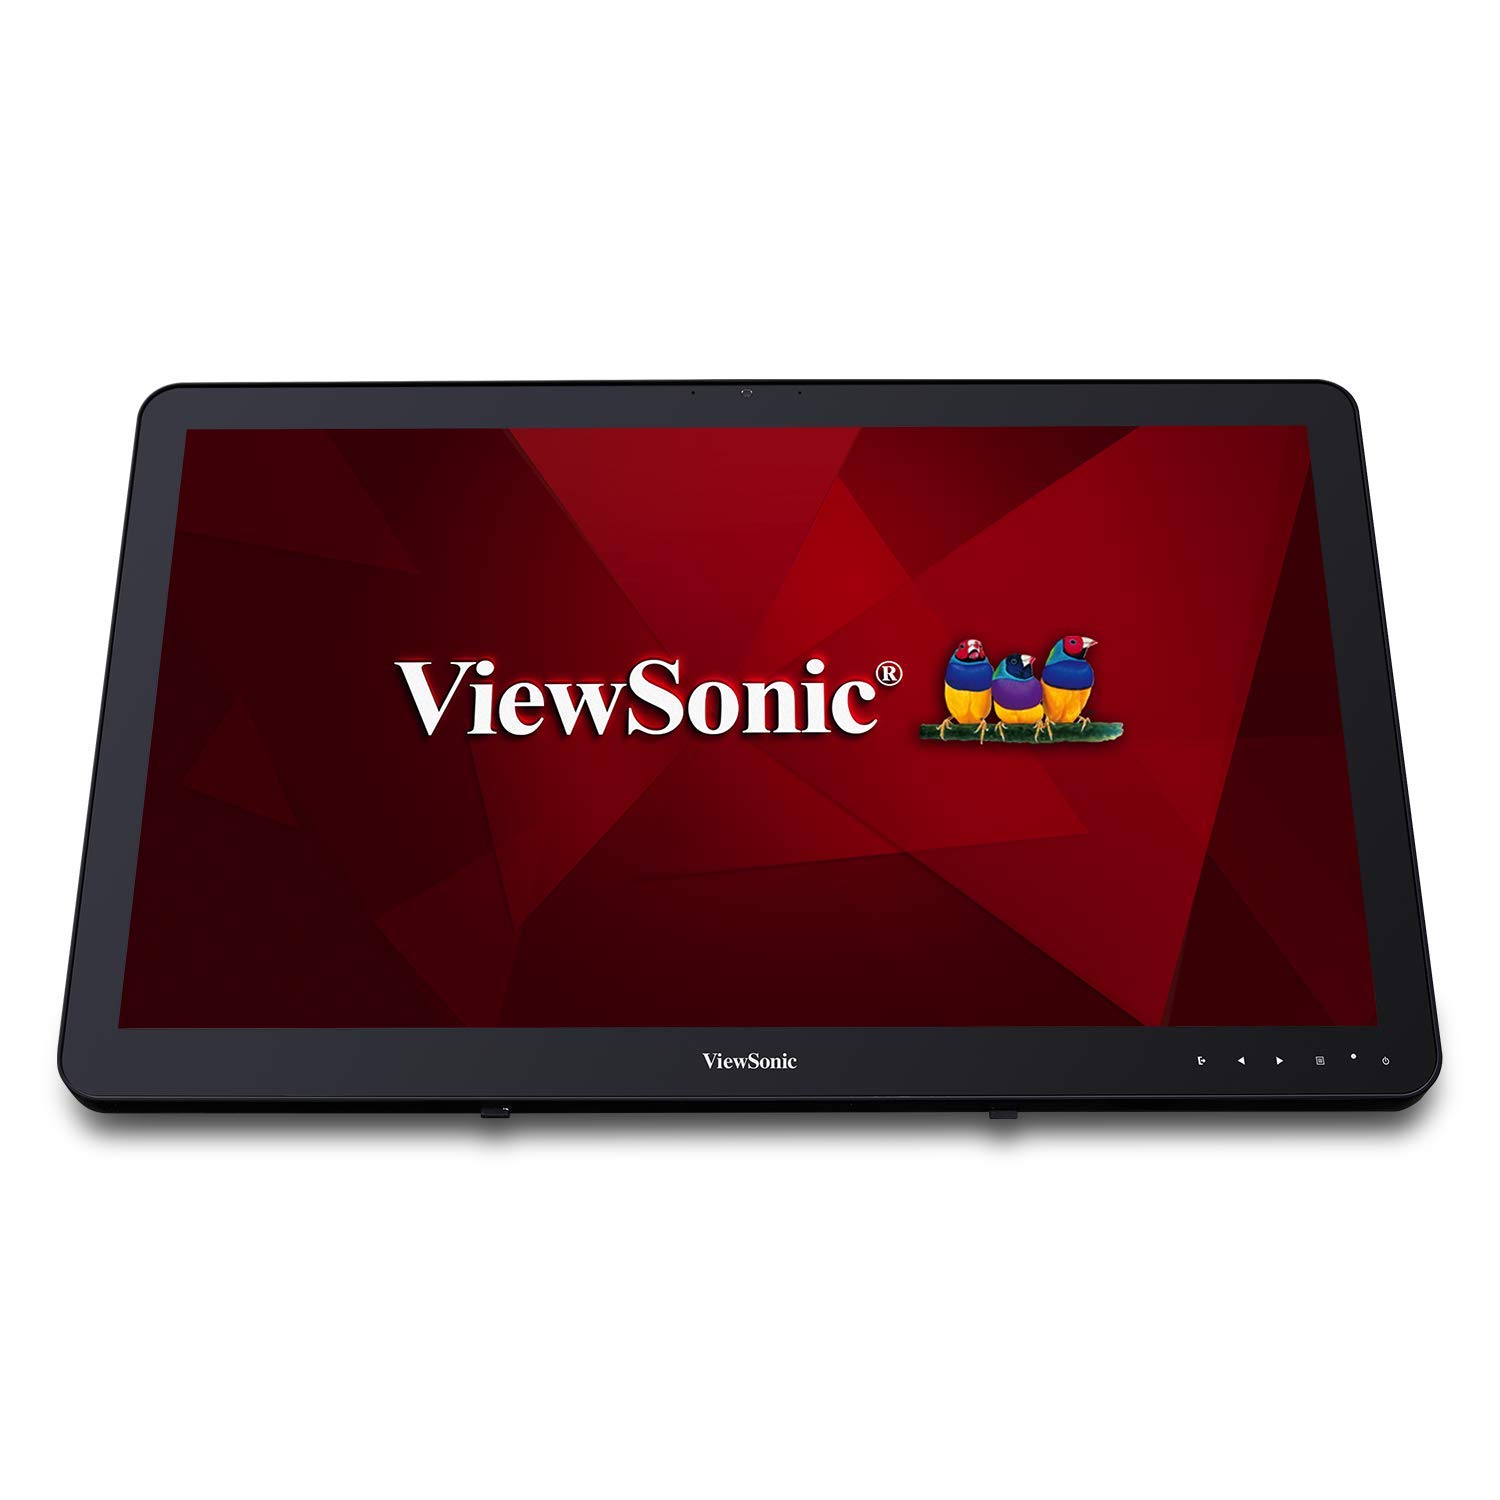  Viewsonic VSD243-BKA-US0 24 इंच 1080p 10-प्वाइंट टच स्मार्ट डिजिटल डिस्प्ले ब्लूटूथ डुअल बैंड वाई...